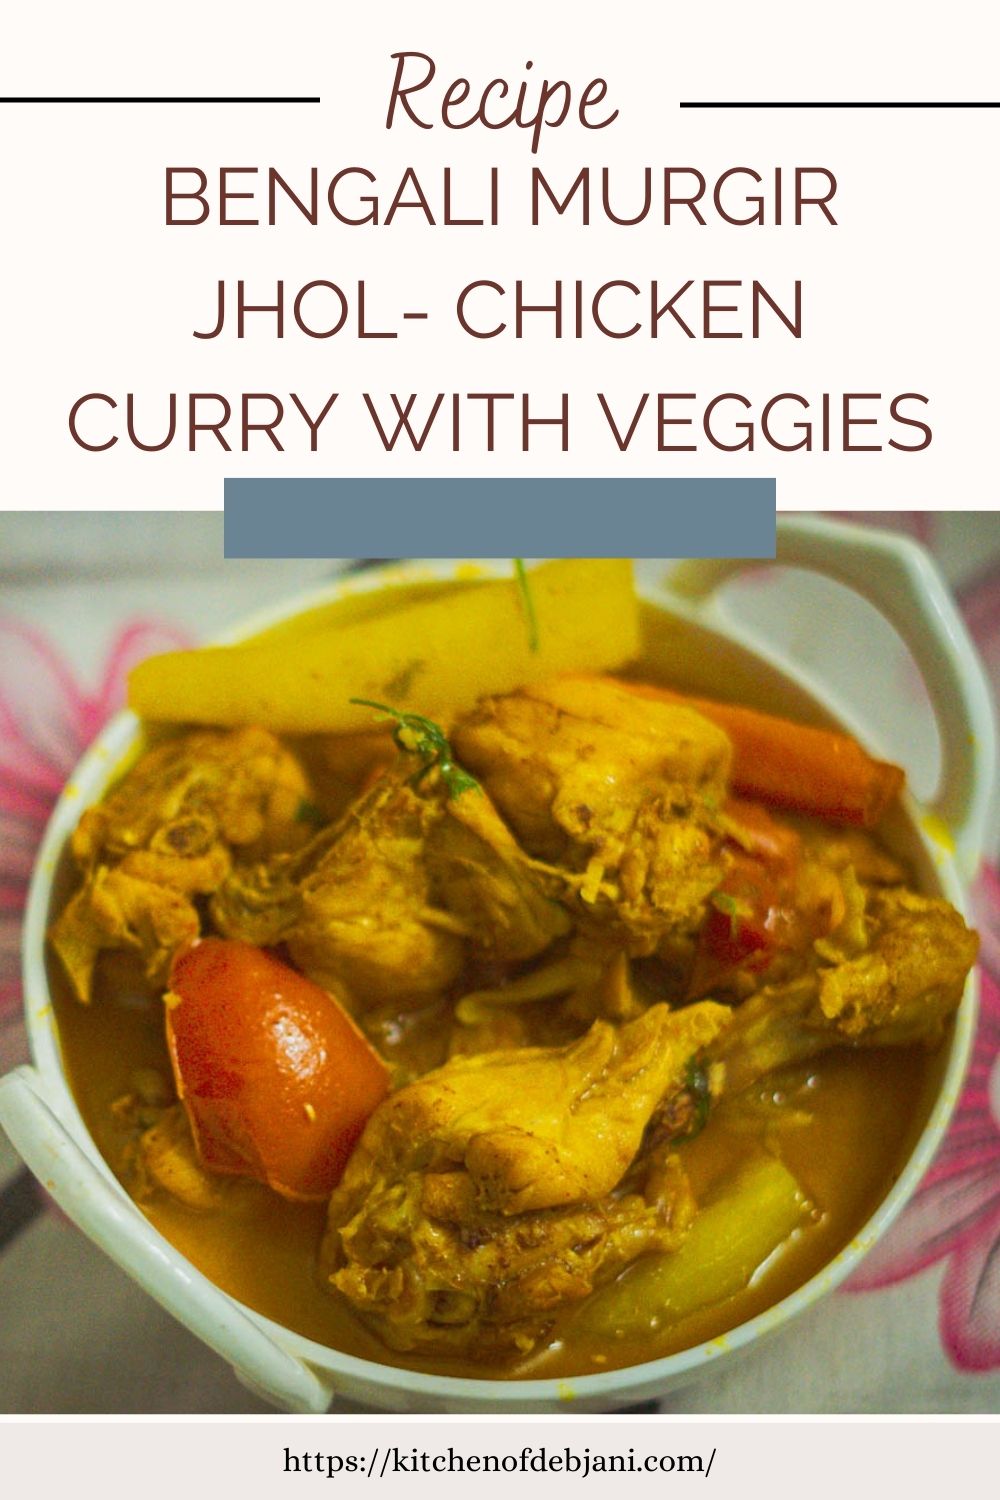 %Bengali Murgir Jhol- chicken curry with veggies pinterest food pin